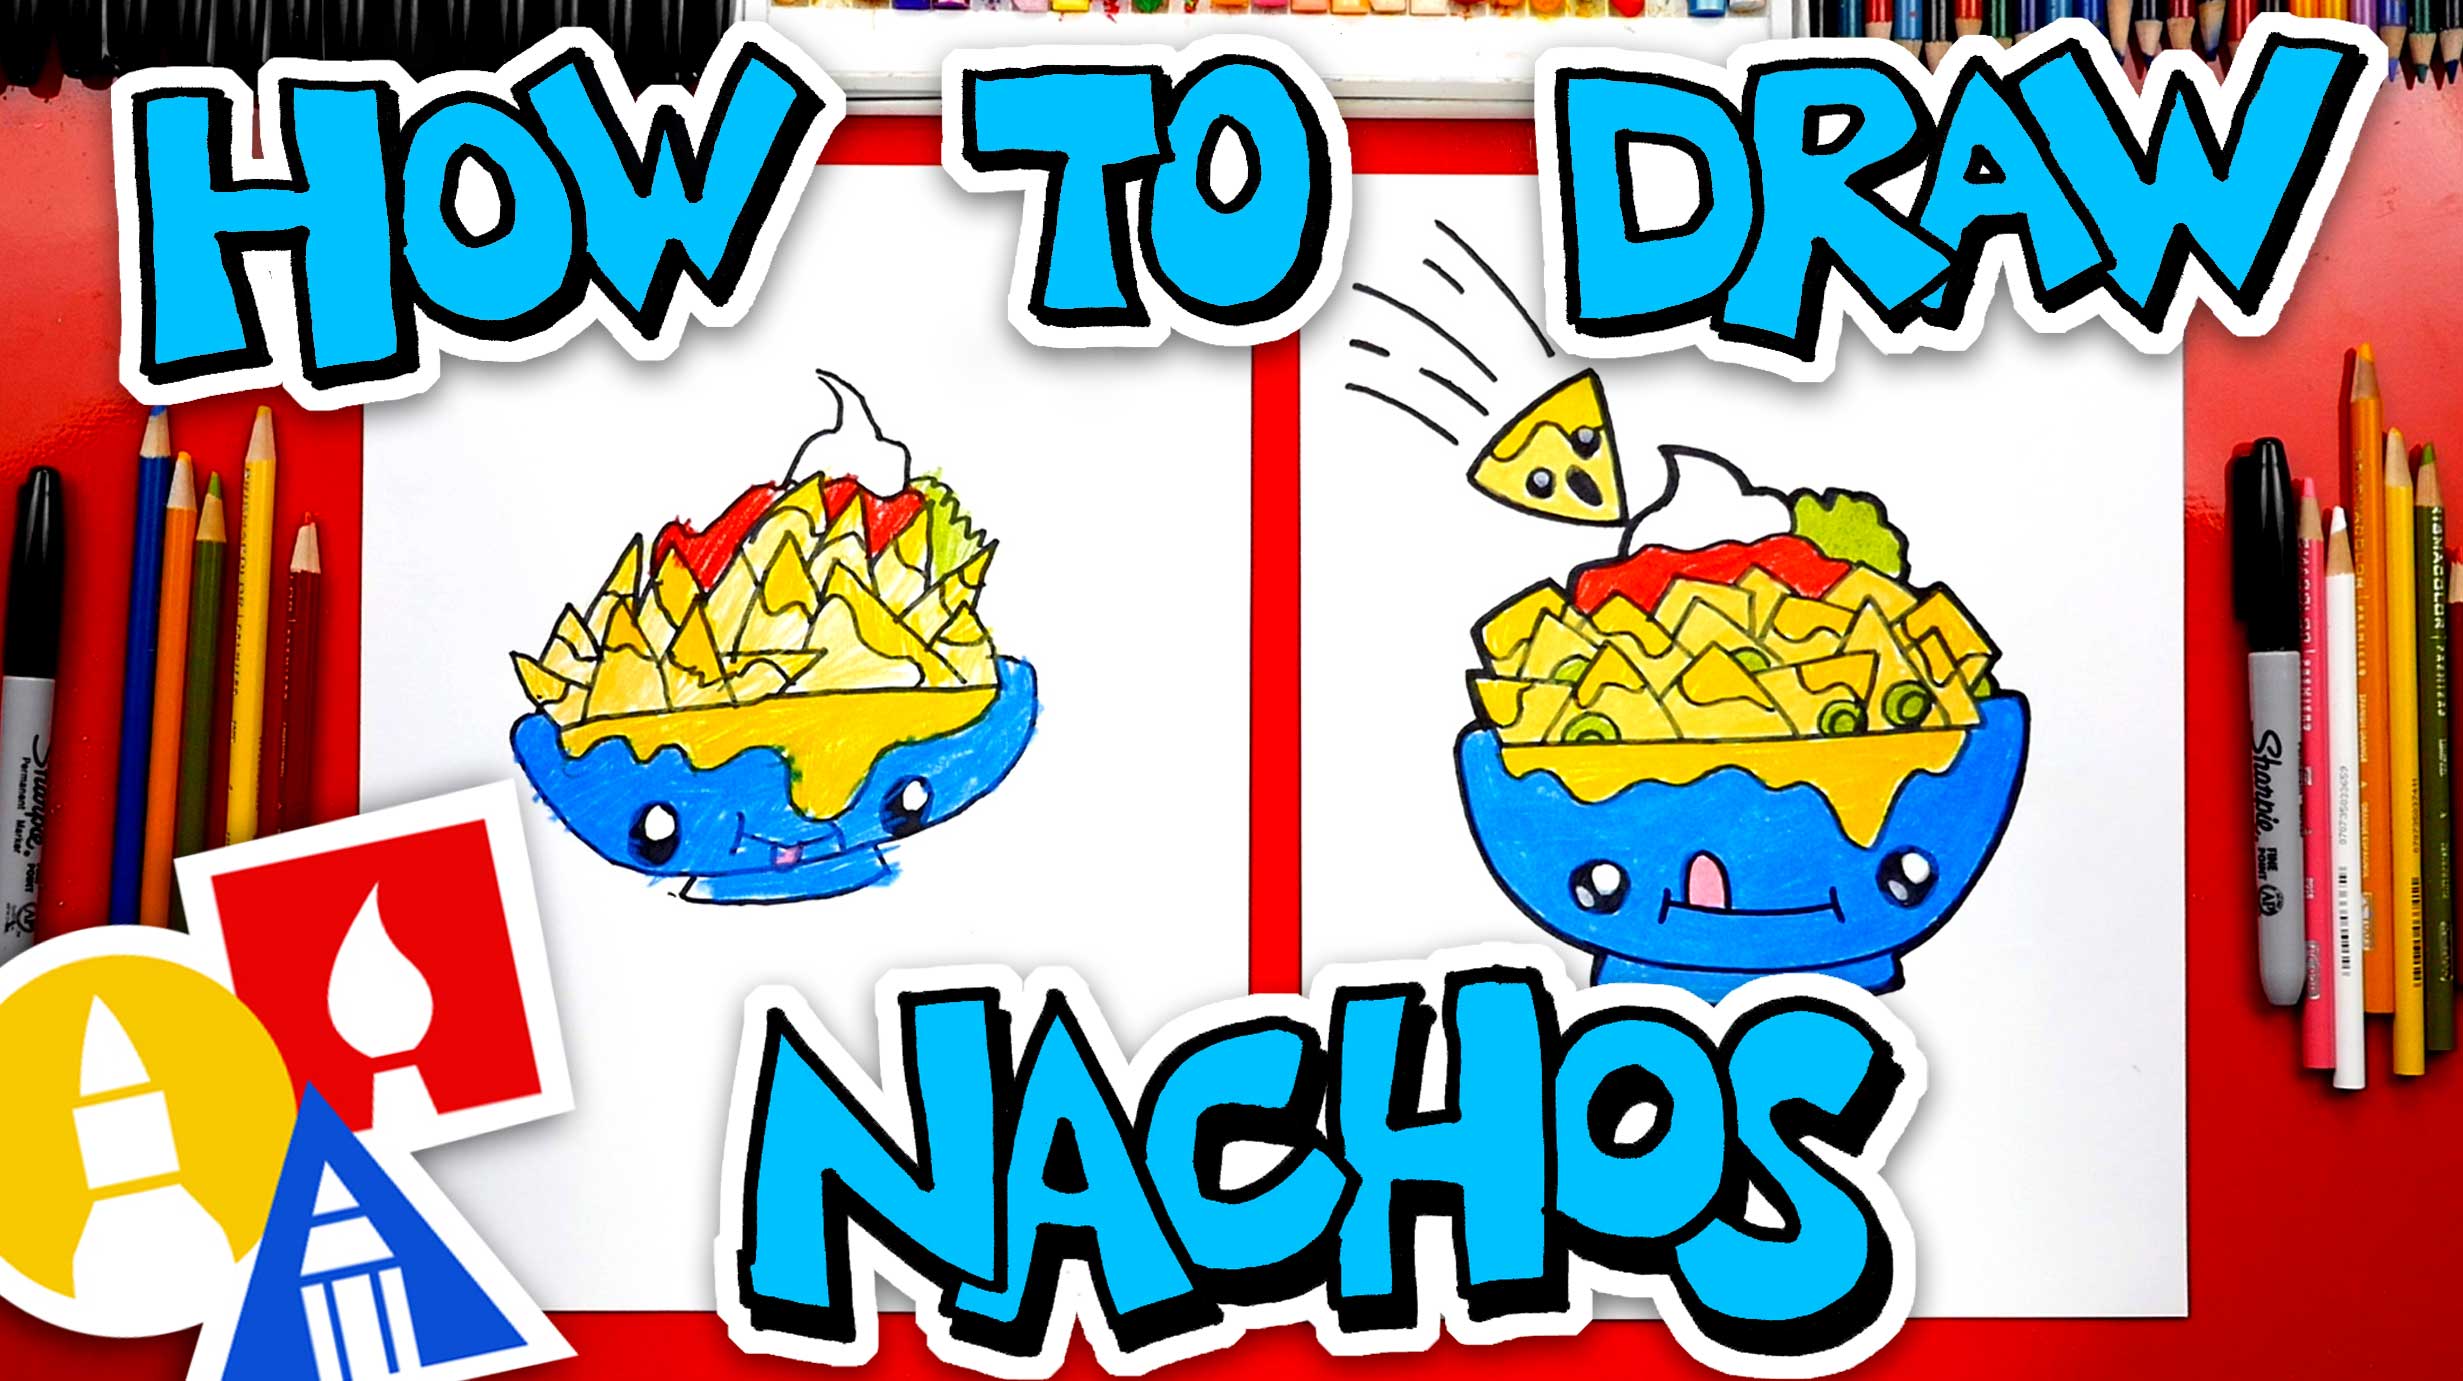 https://artforkidshub.com/wp-content/uploads/2019/07/How-To-Draw-Funny-Nachos-thumbnail.jpg